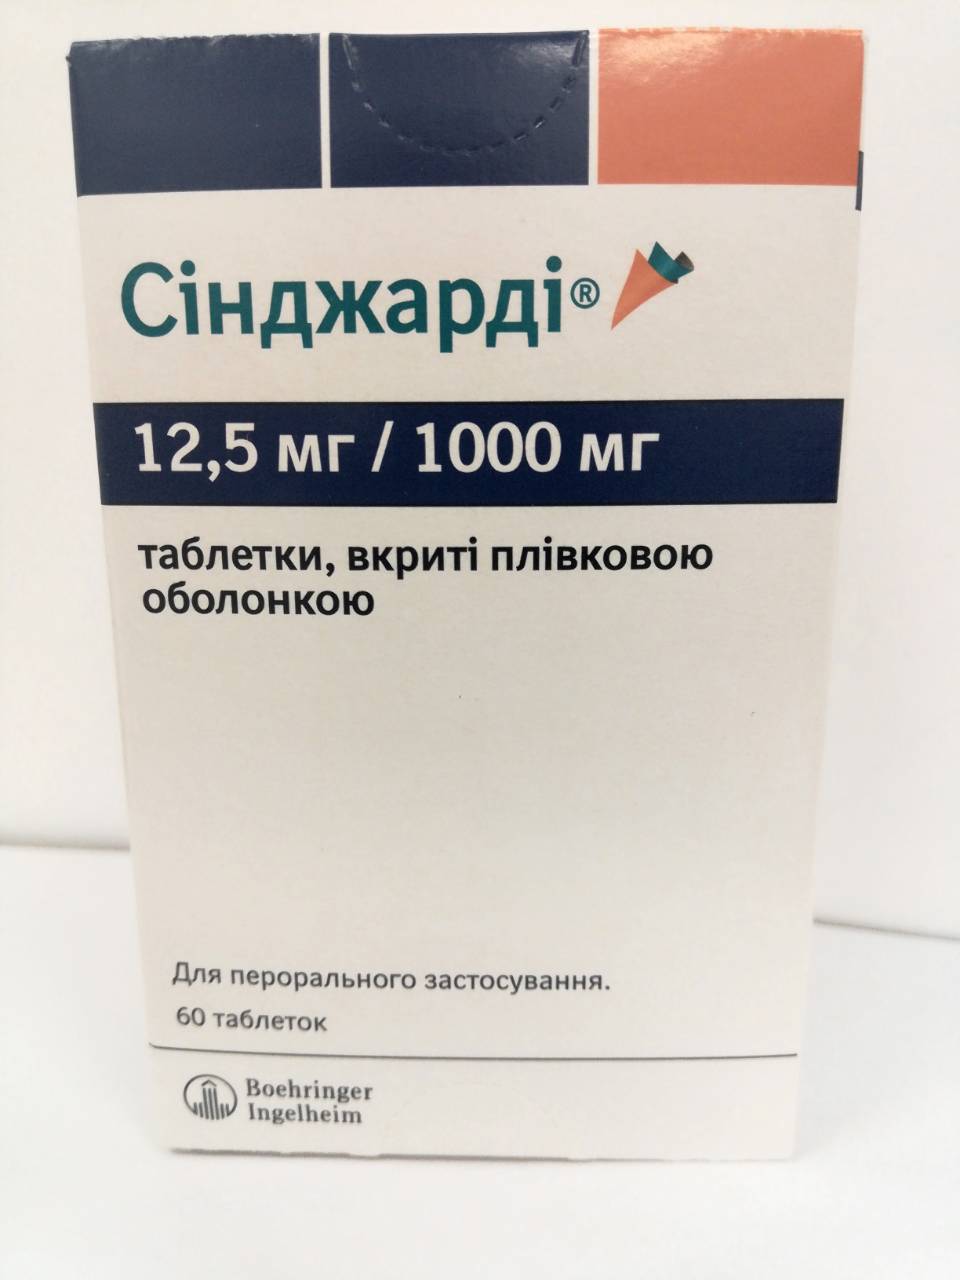 7120 КАЗАНО® - Metformin and alogliptin